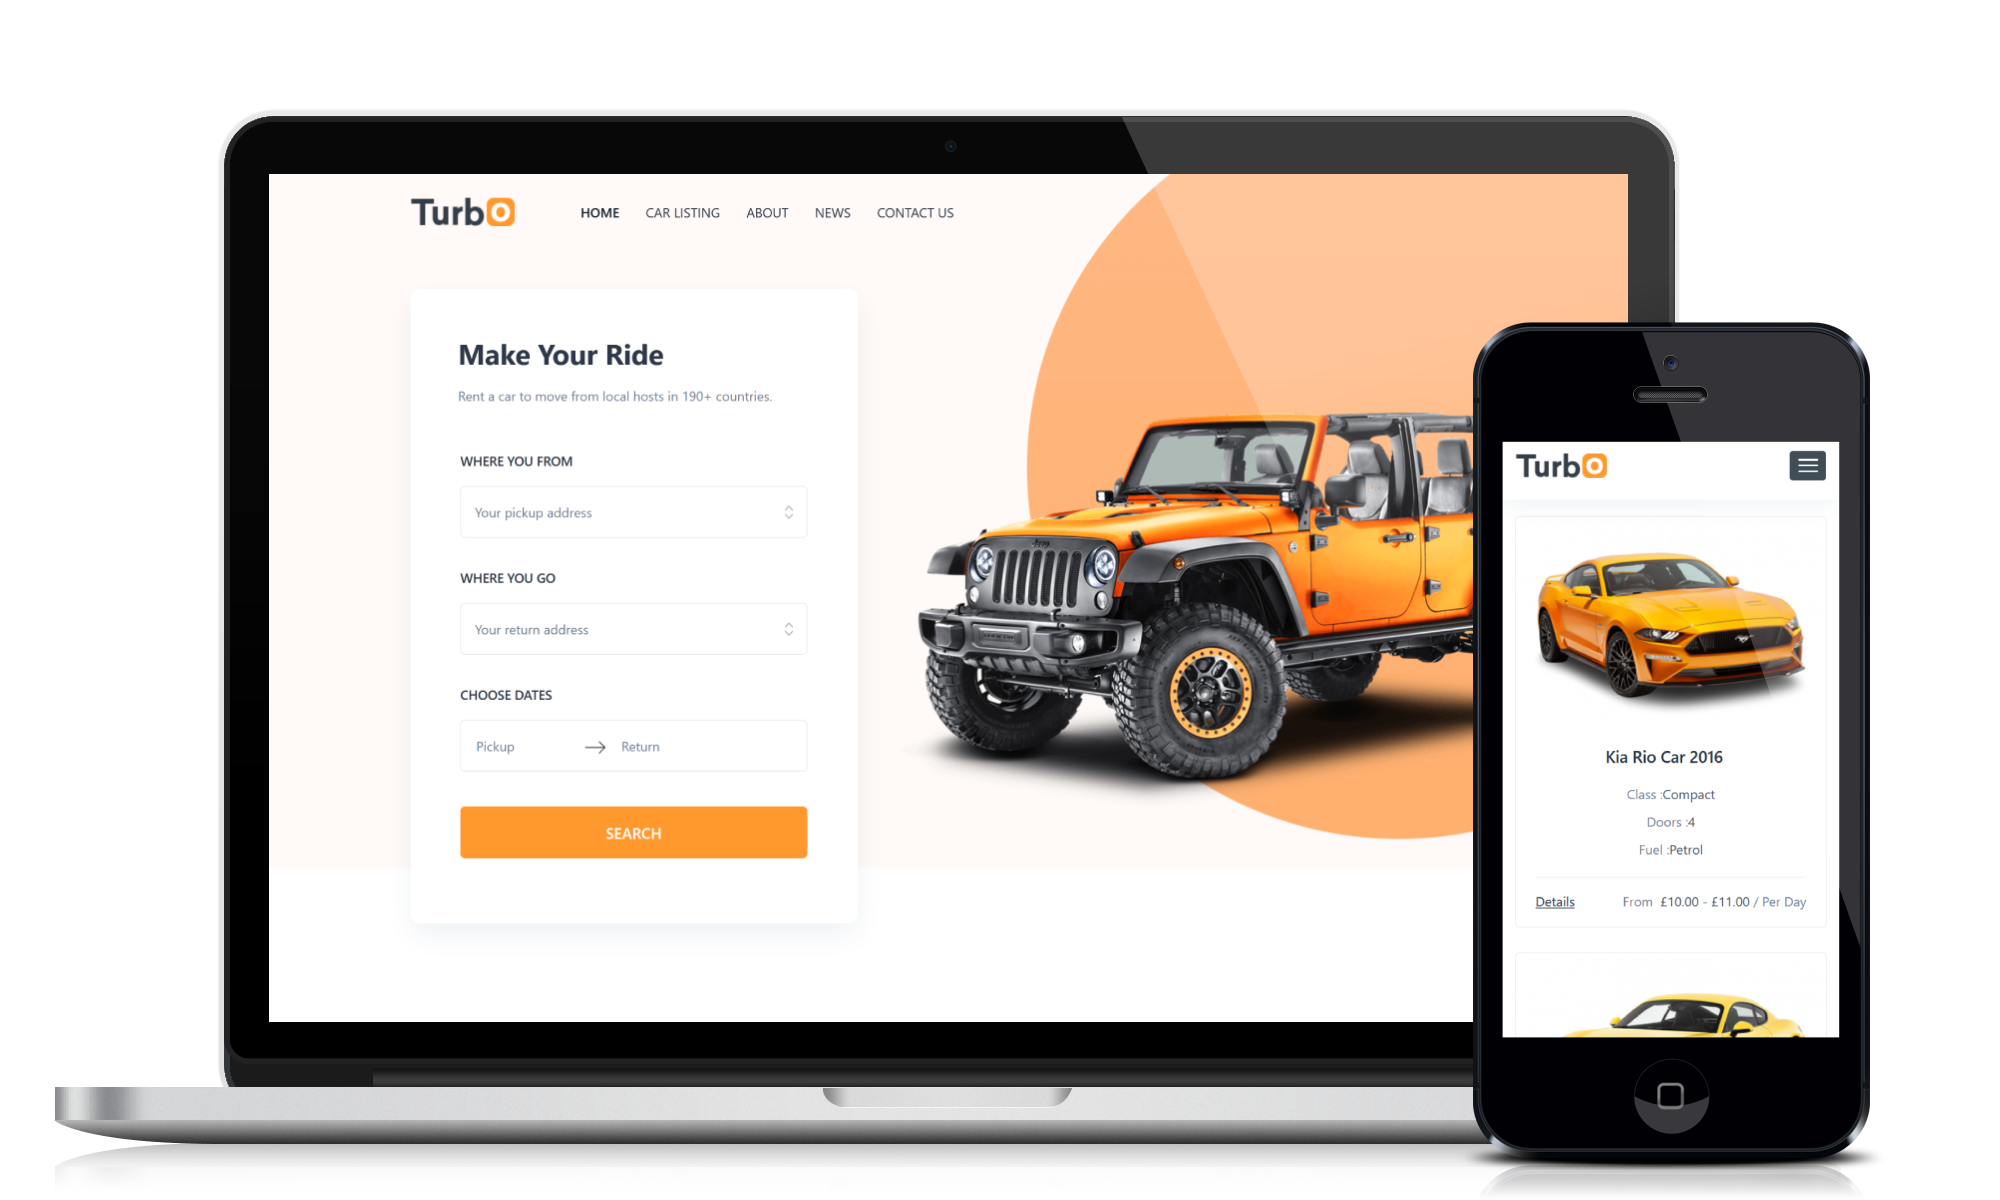 Car rental website design and development service